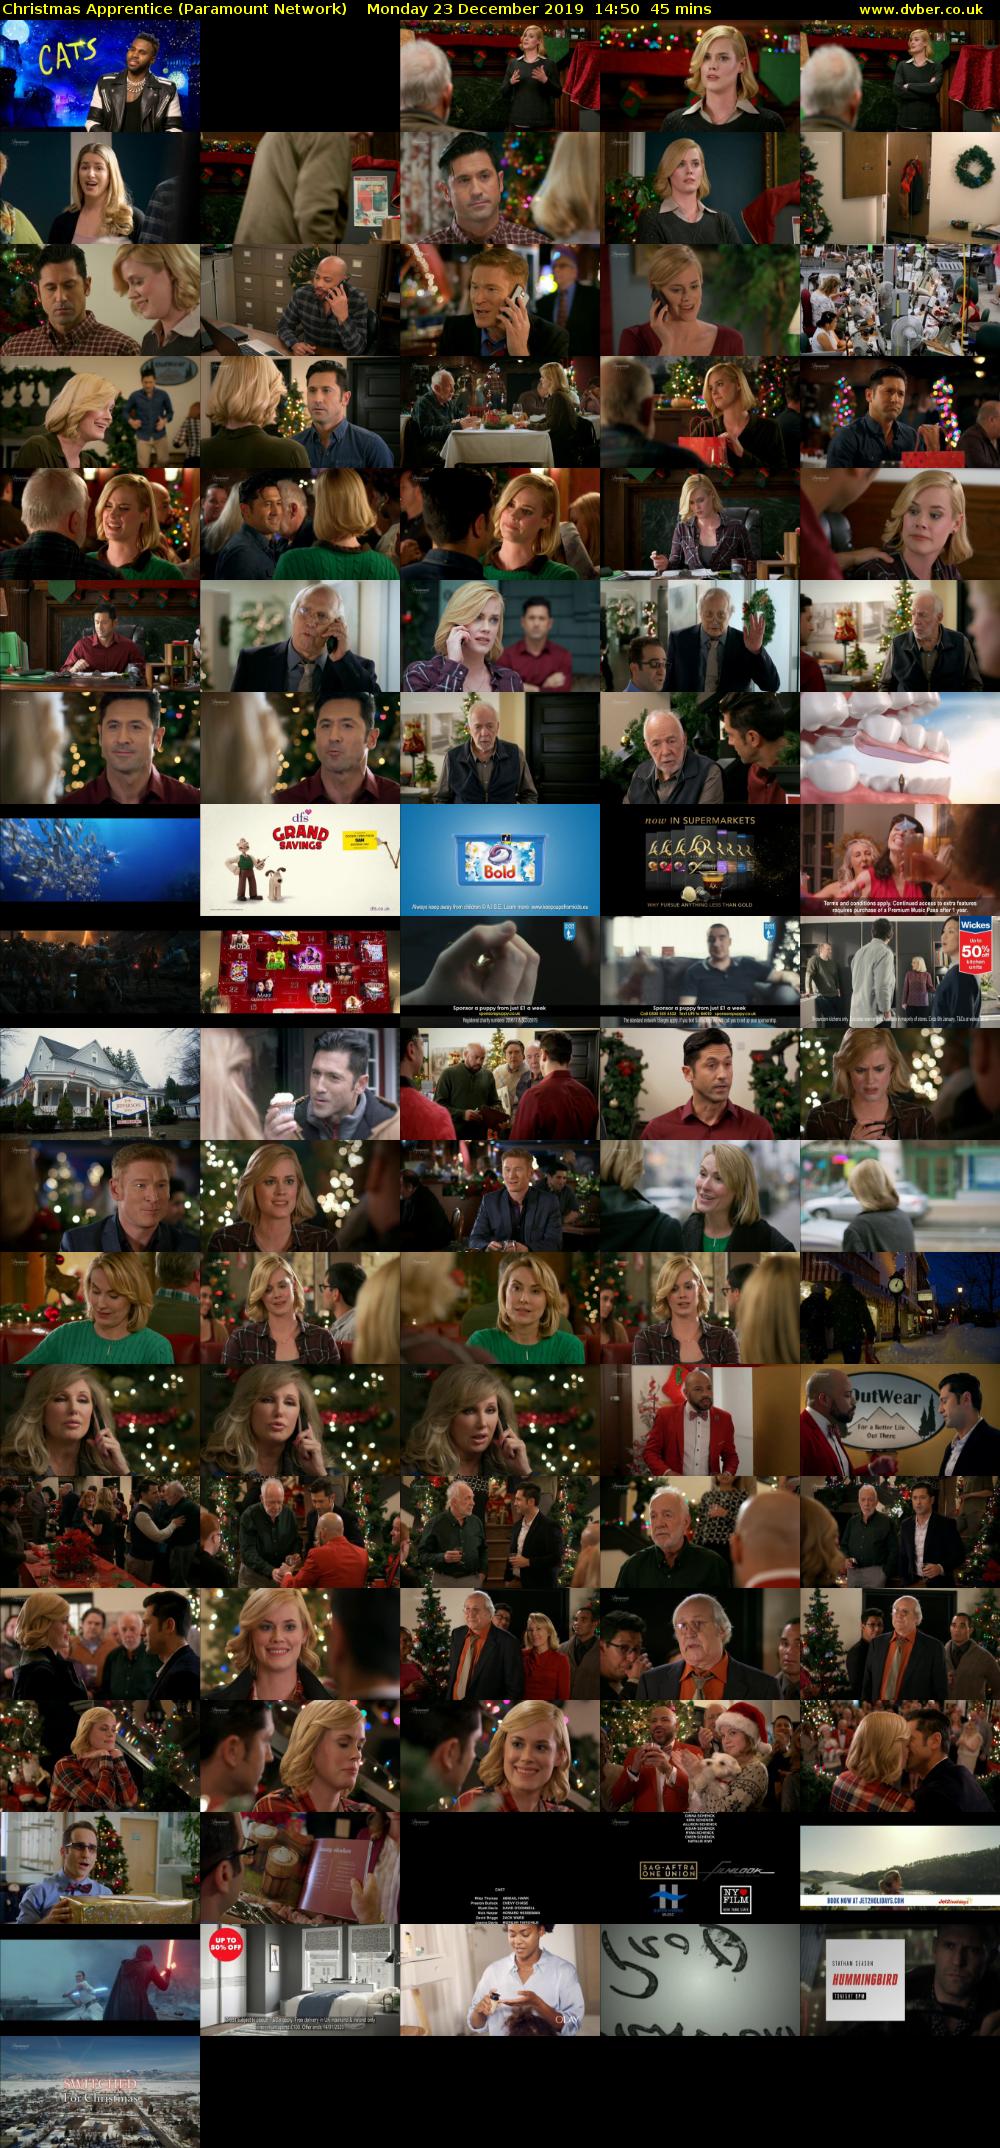 Christmas Apprentice (Paramount Network) Monday 23 December 2019 14:50 - 15:35